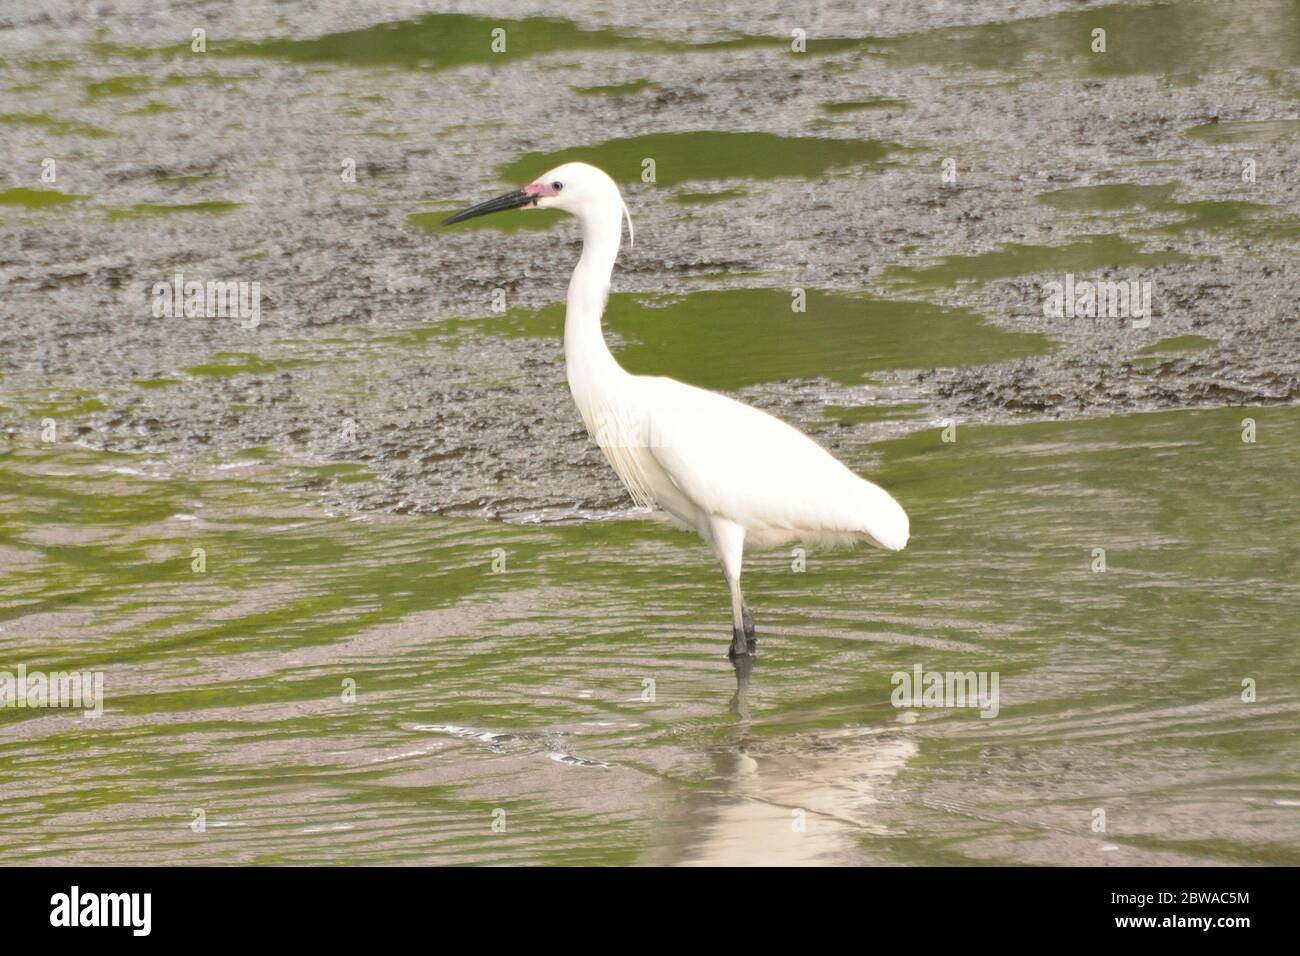 White Japanese Crane in water body Stock Photo - Alamy